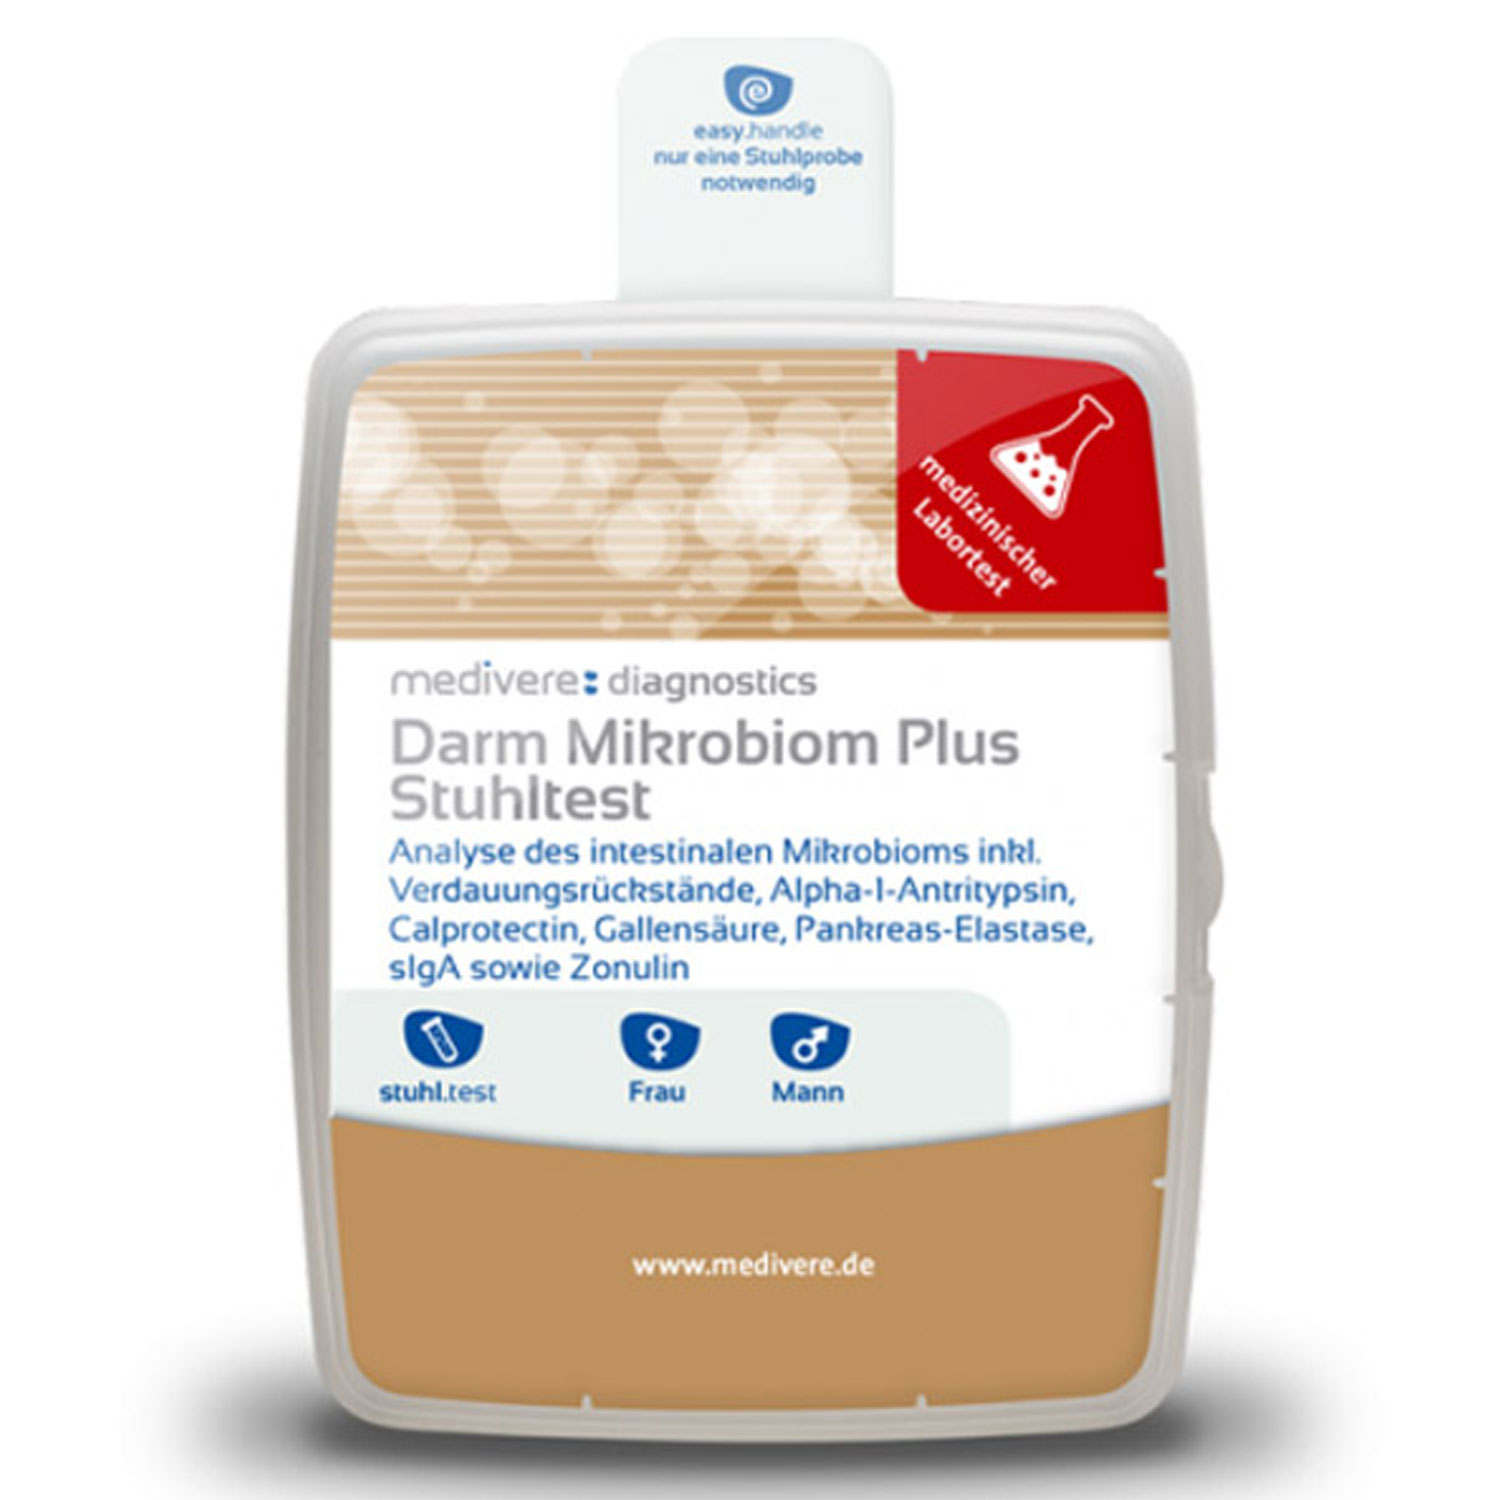 Darm-Mikrobiom Plus Stuhltest von medivere